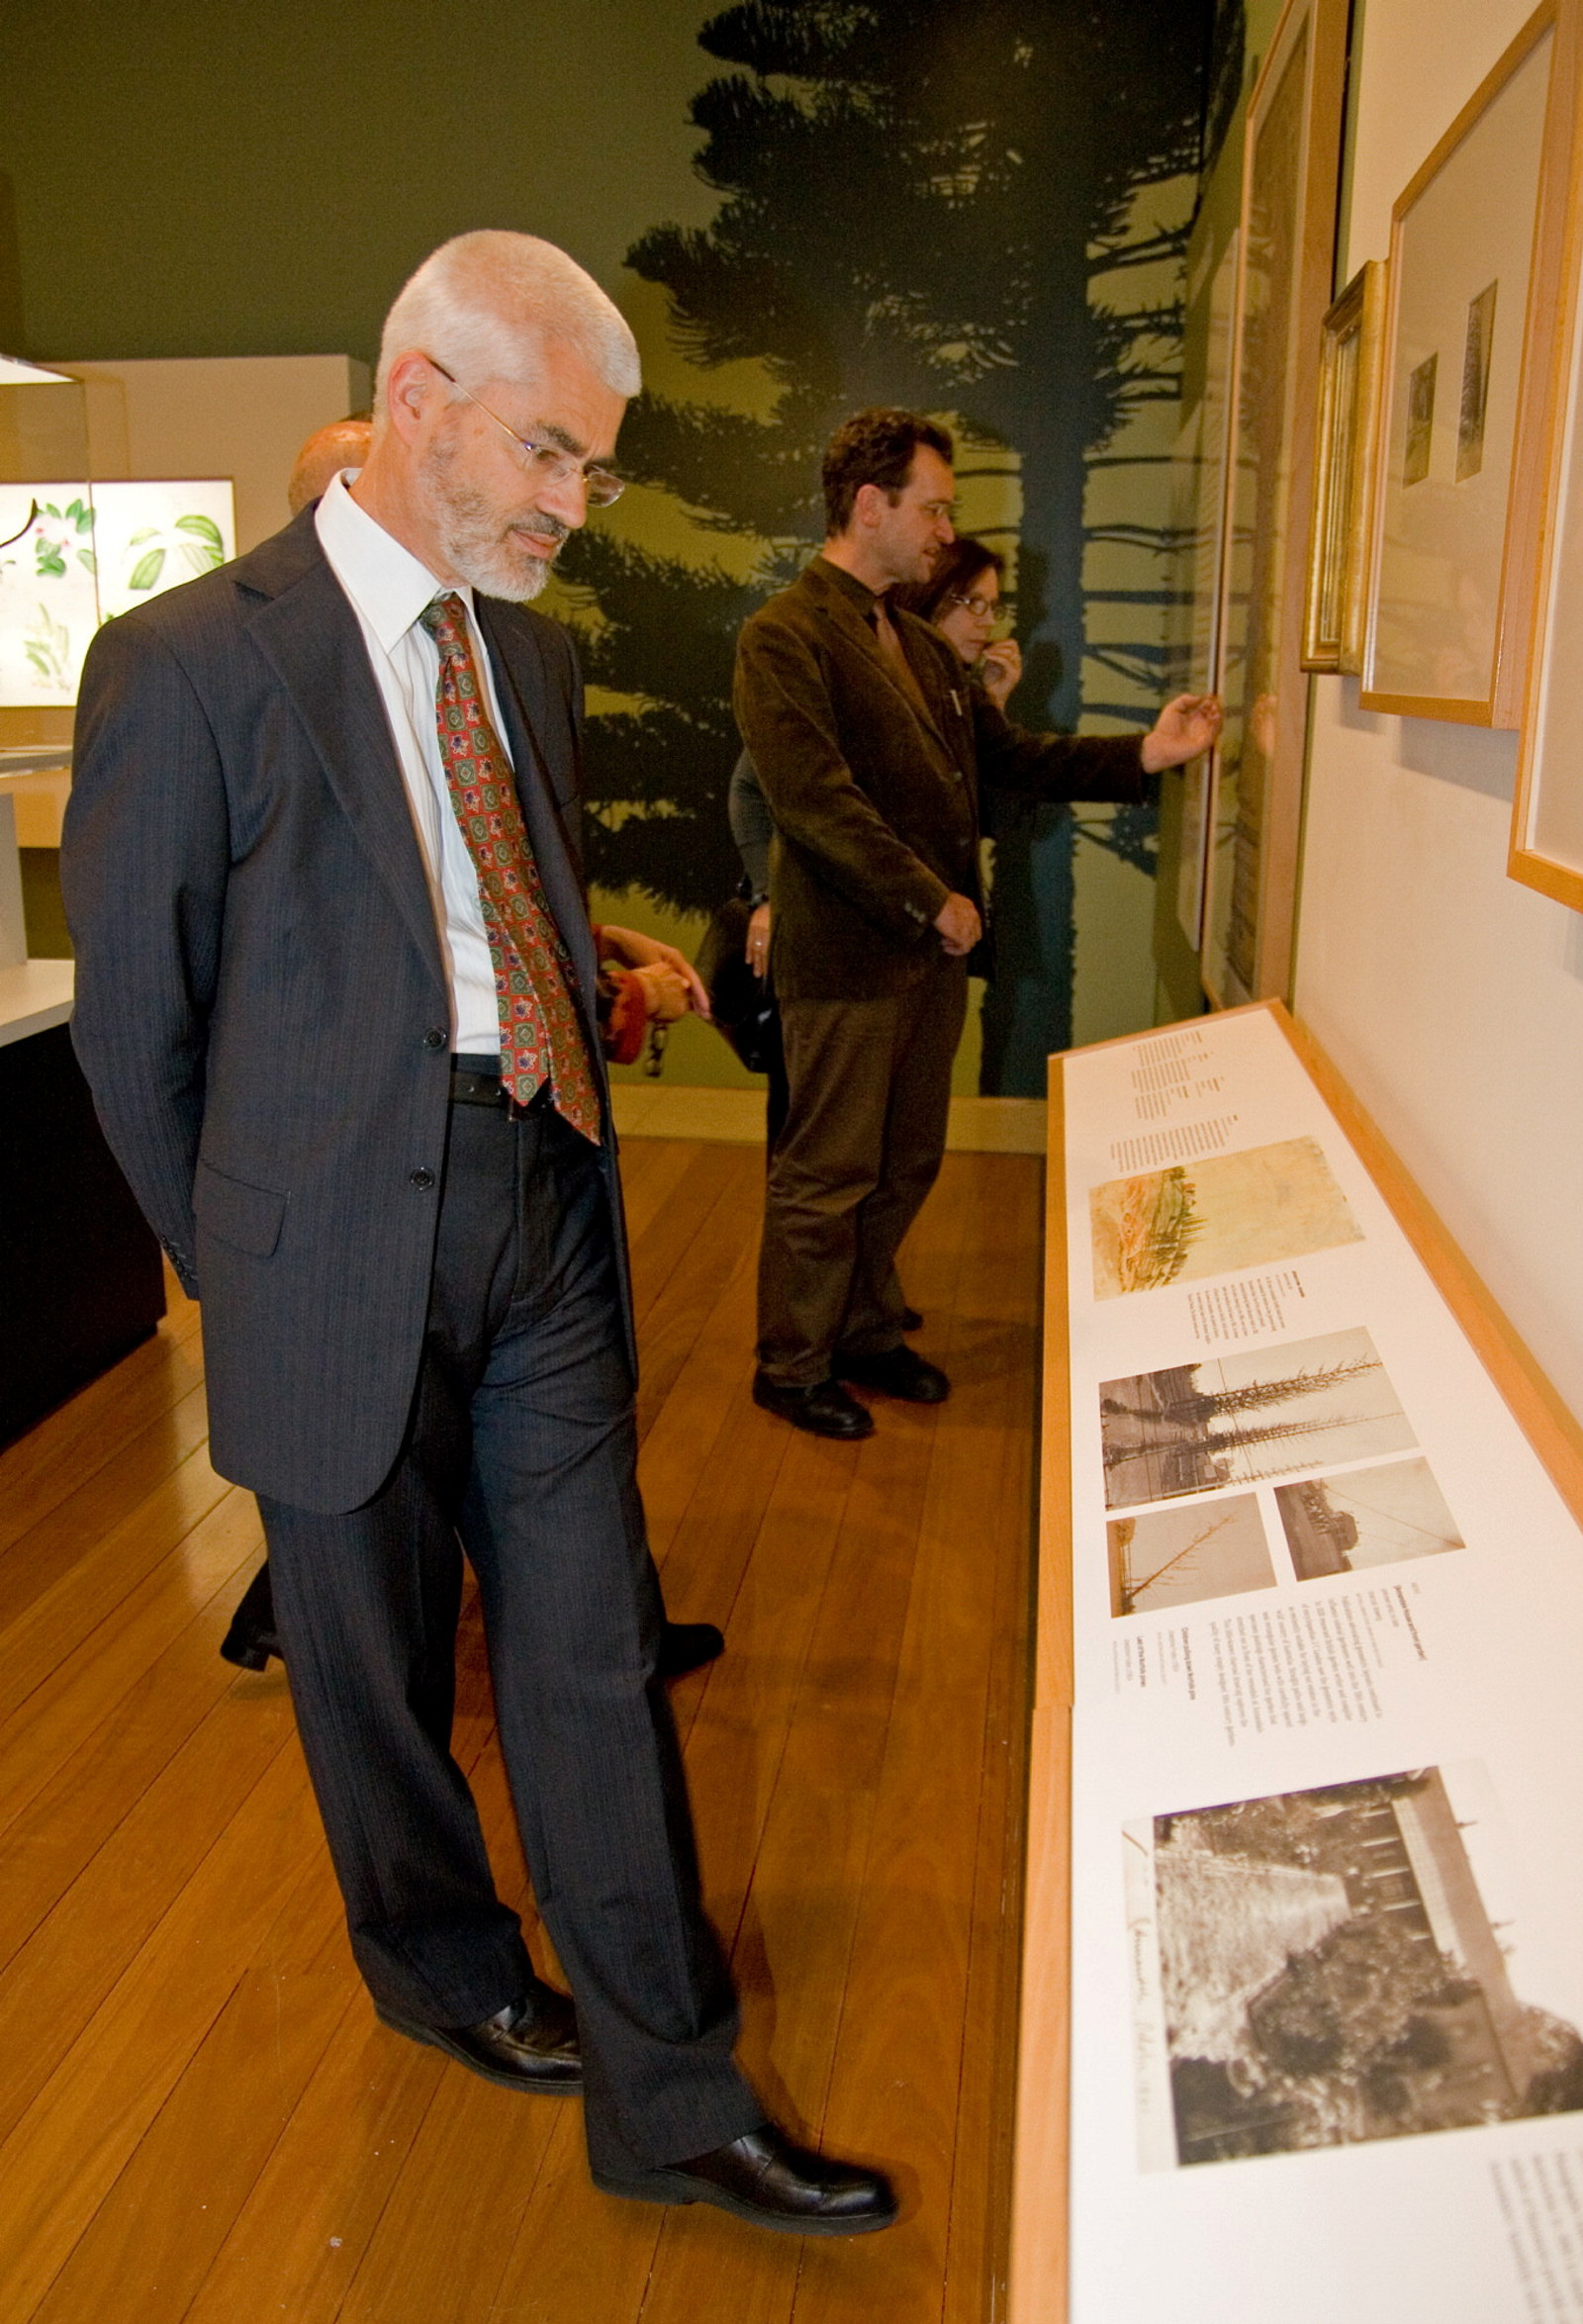 Richard Aitken of the Australian Garden Historical Association views the exhibition